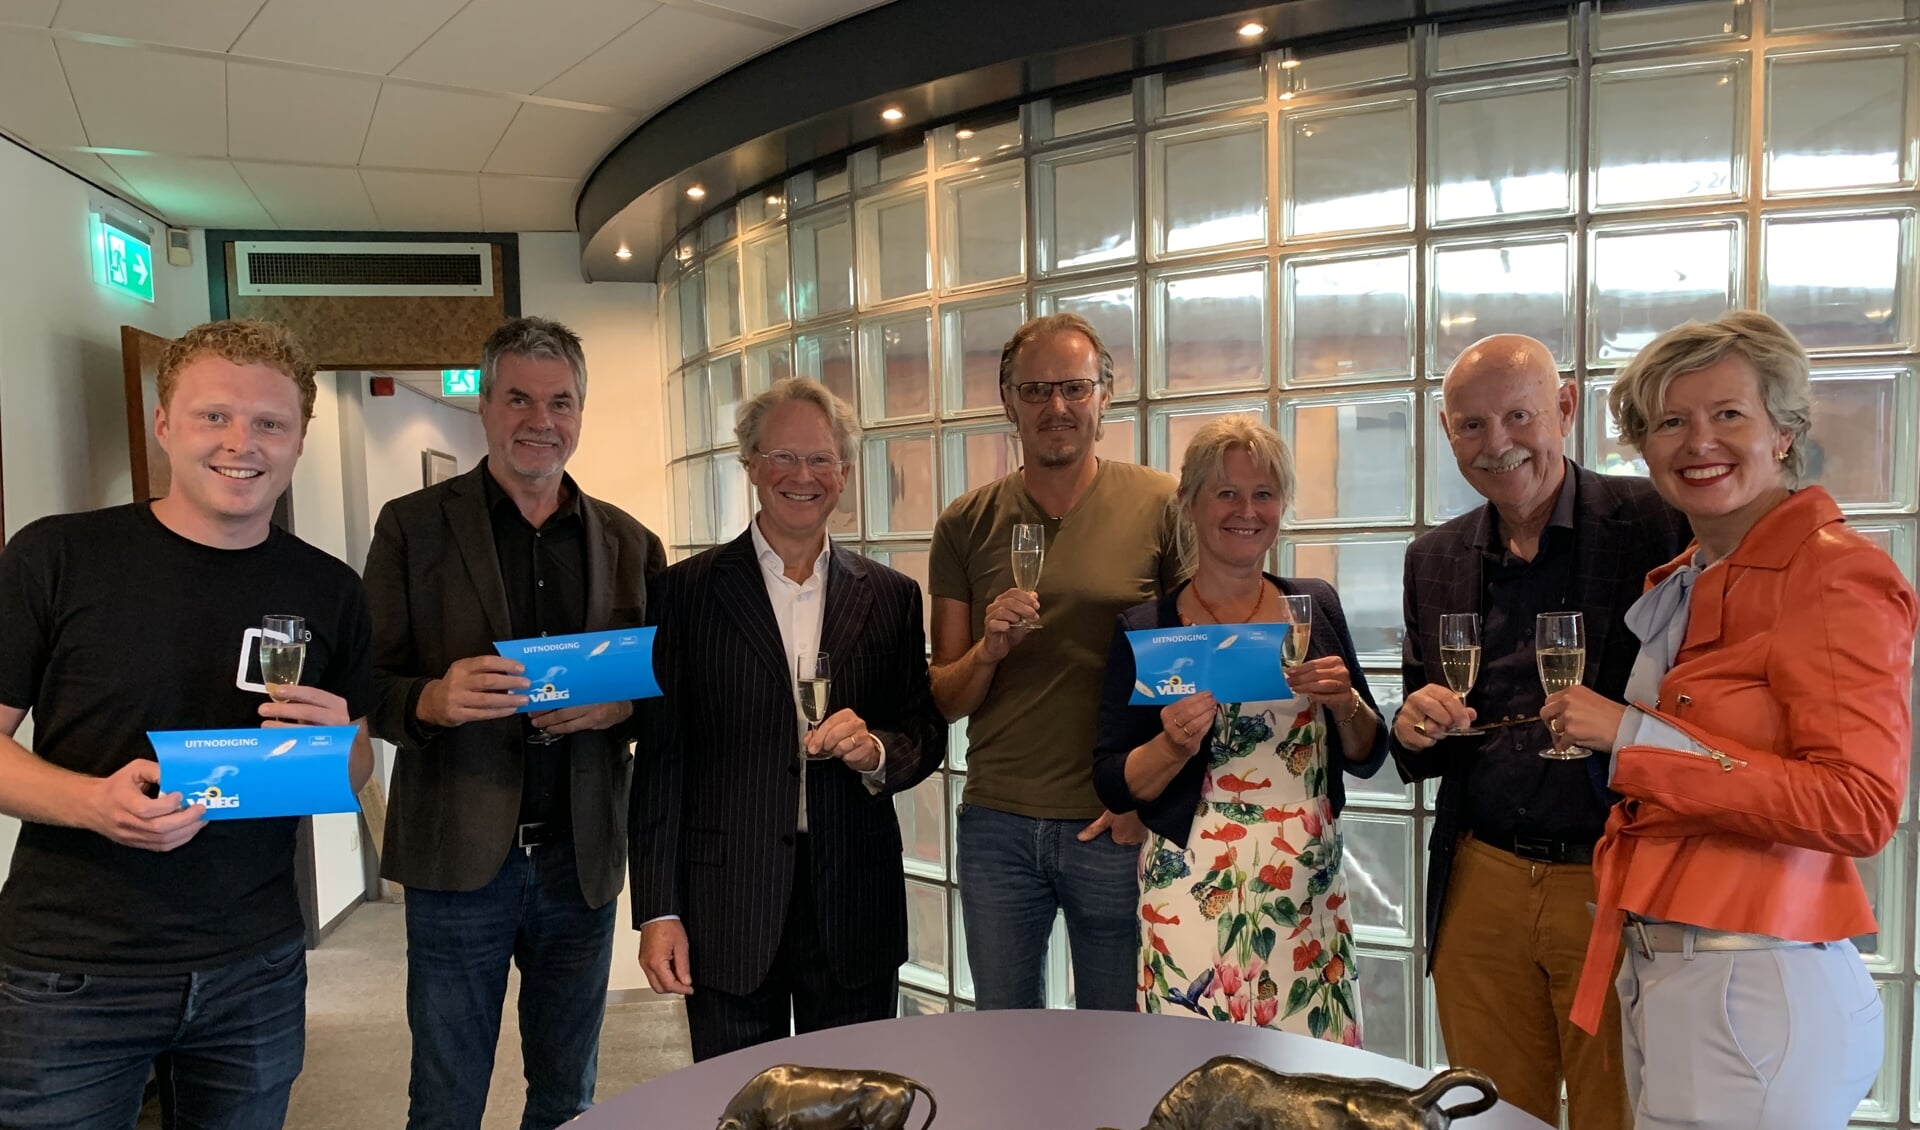 De jury en genomineerden: V.l.n.r. Martijn Apeldoorn, Simon Loerakker, Dick Winkelhuis, Patrick Oud, Gitta Klopper, Henk van Hylckama Vlieg en Elske Doets. 